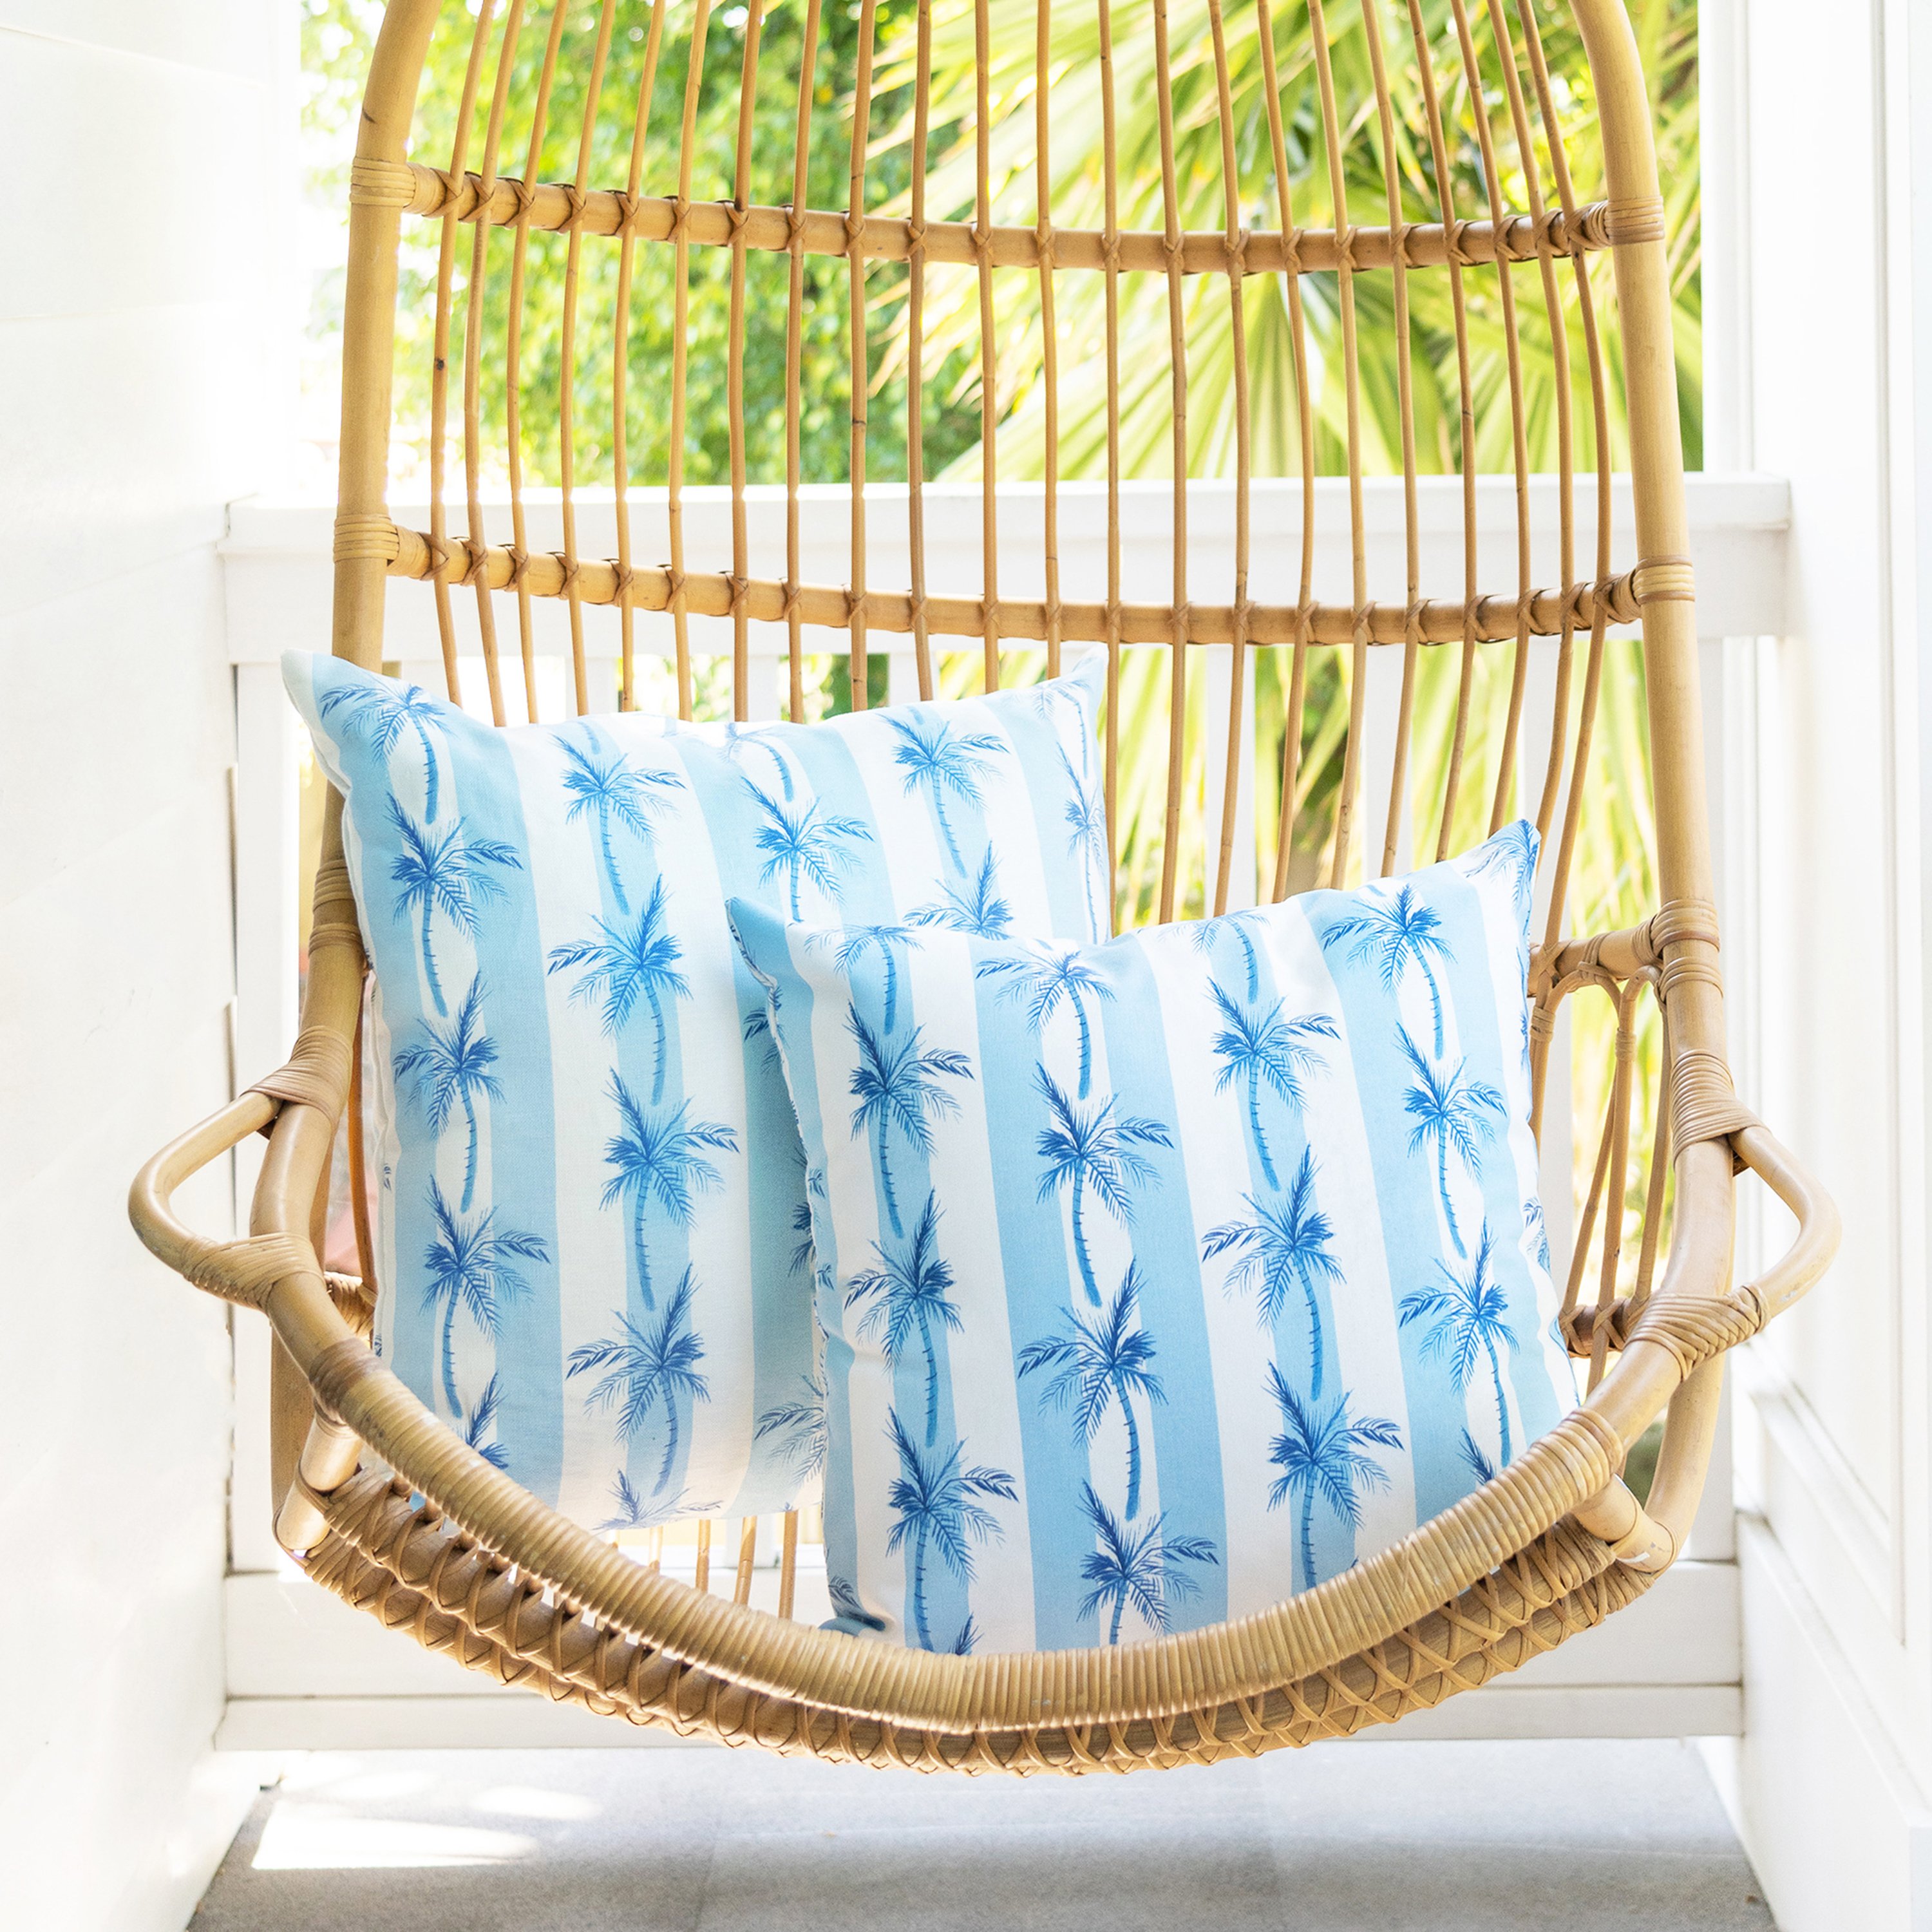 The Cabana Stripe Palms Pillow, Blue